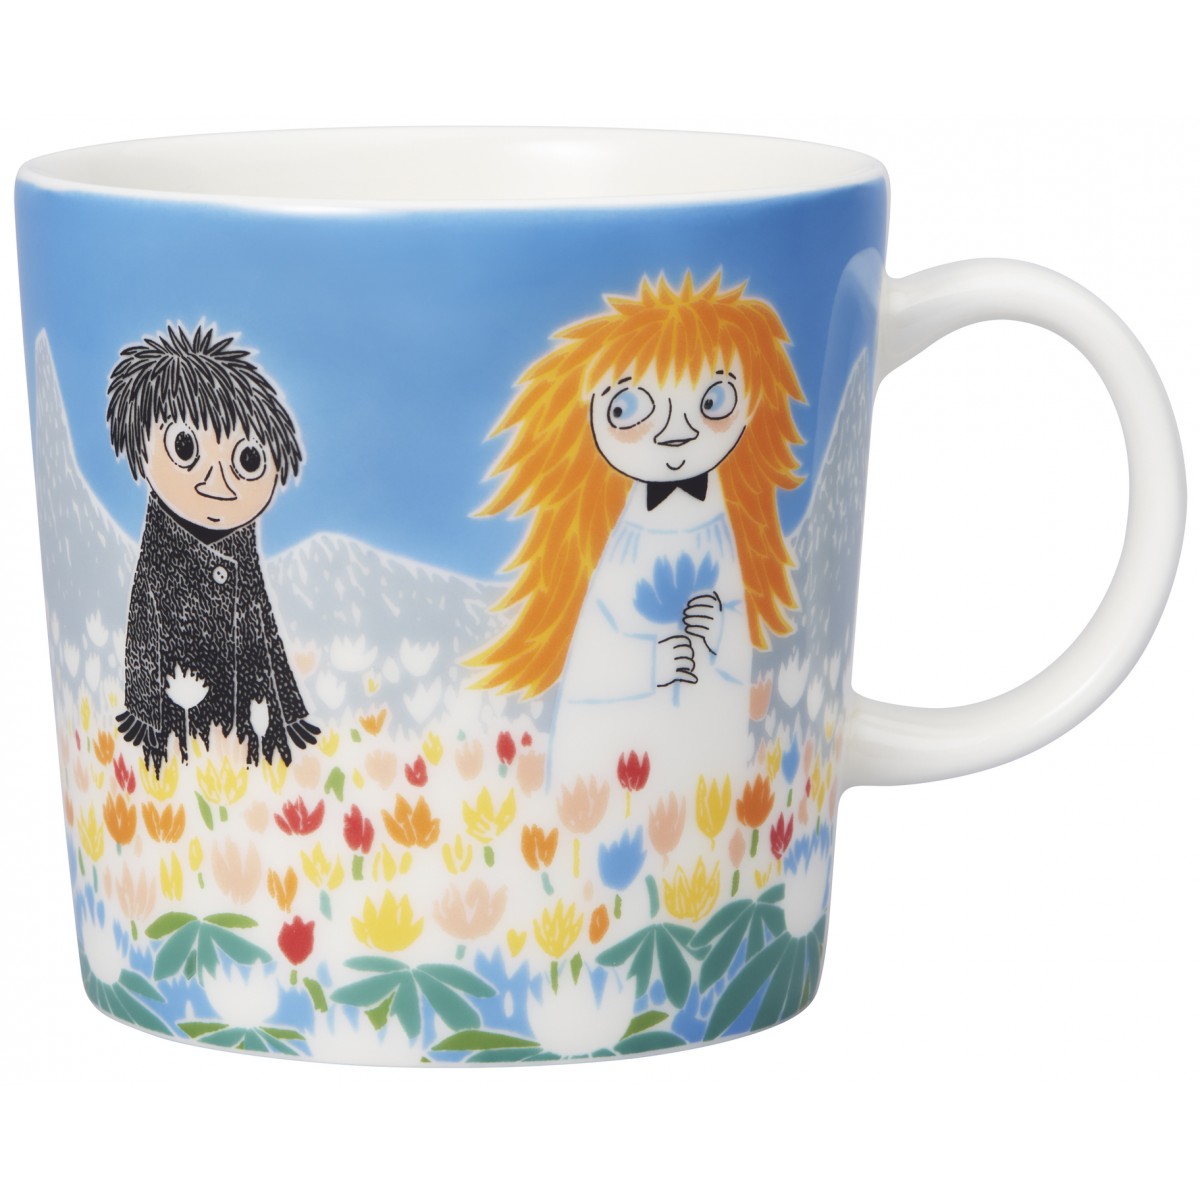 Friendship - Moomin mug